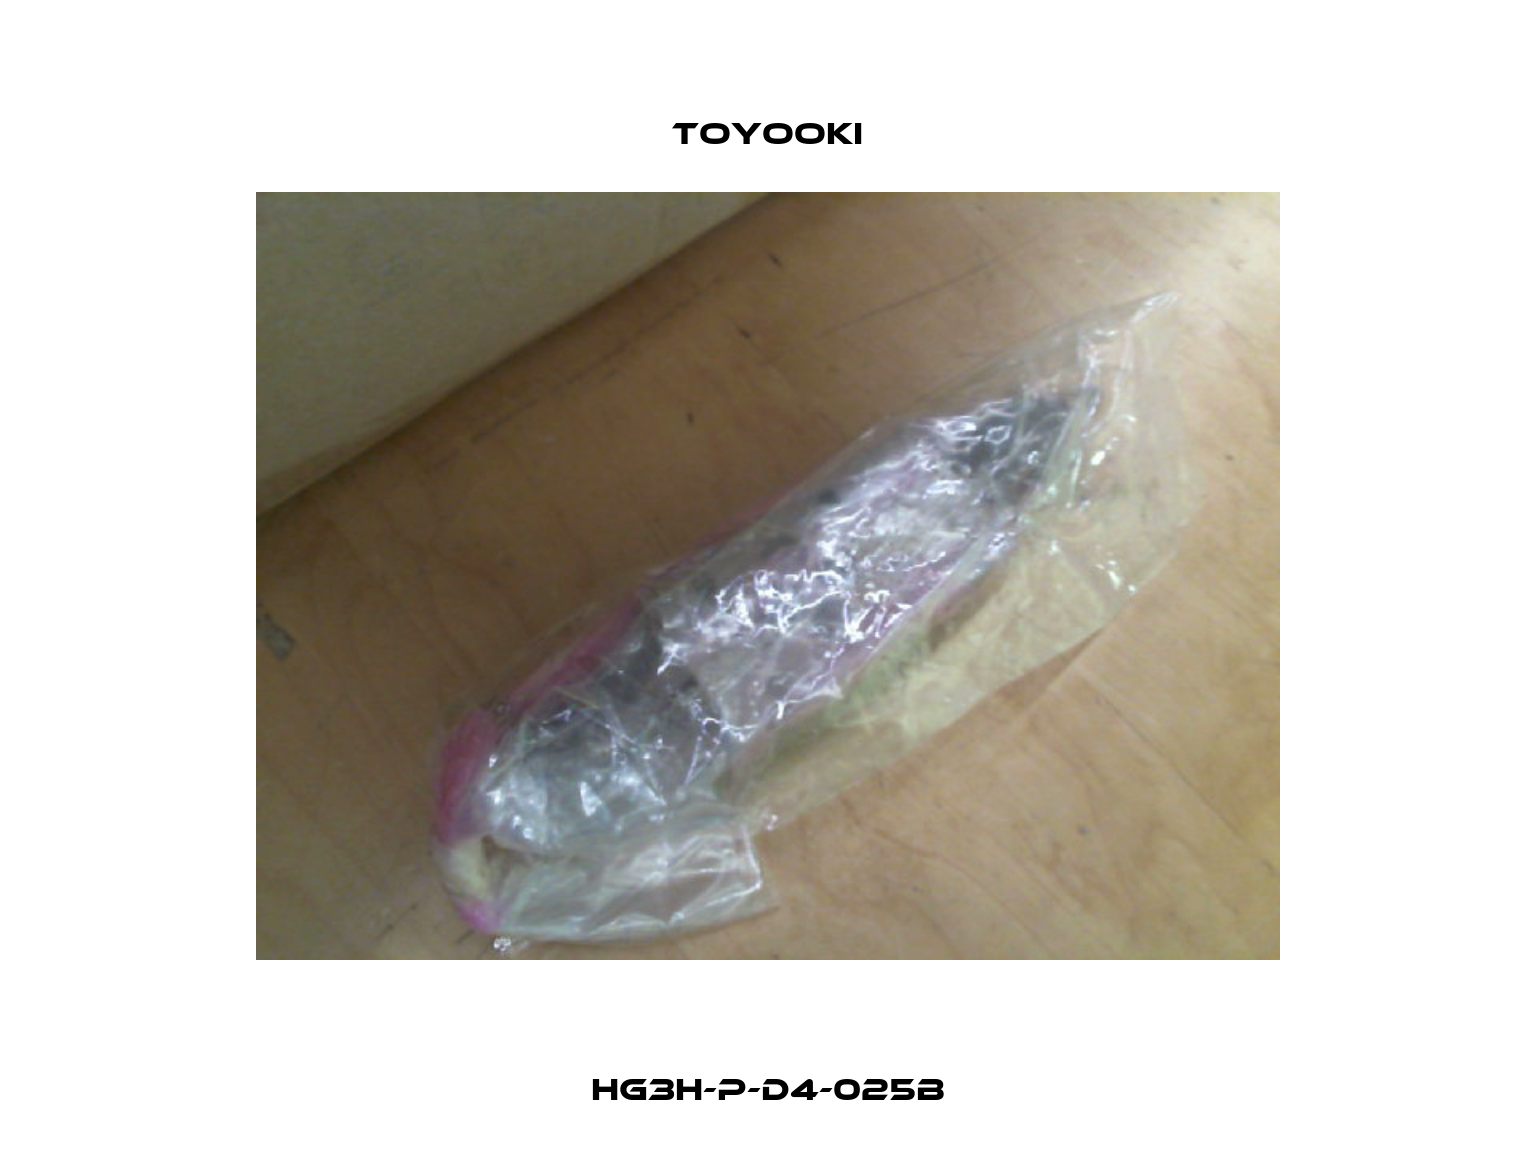 HG3H-P-D4-025B Toyooki